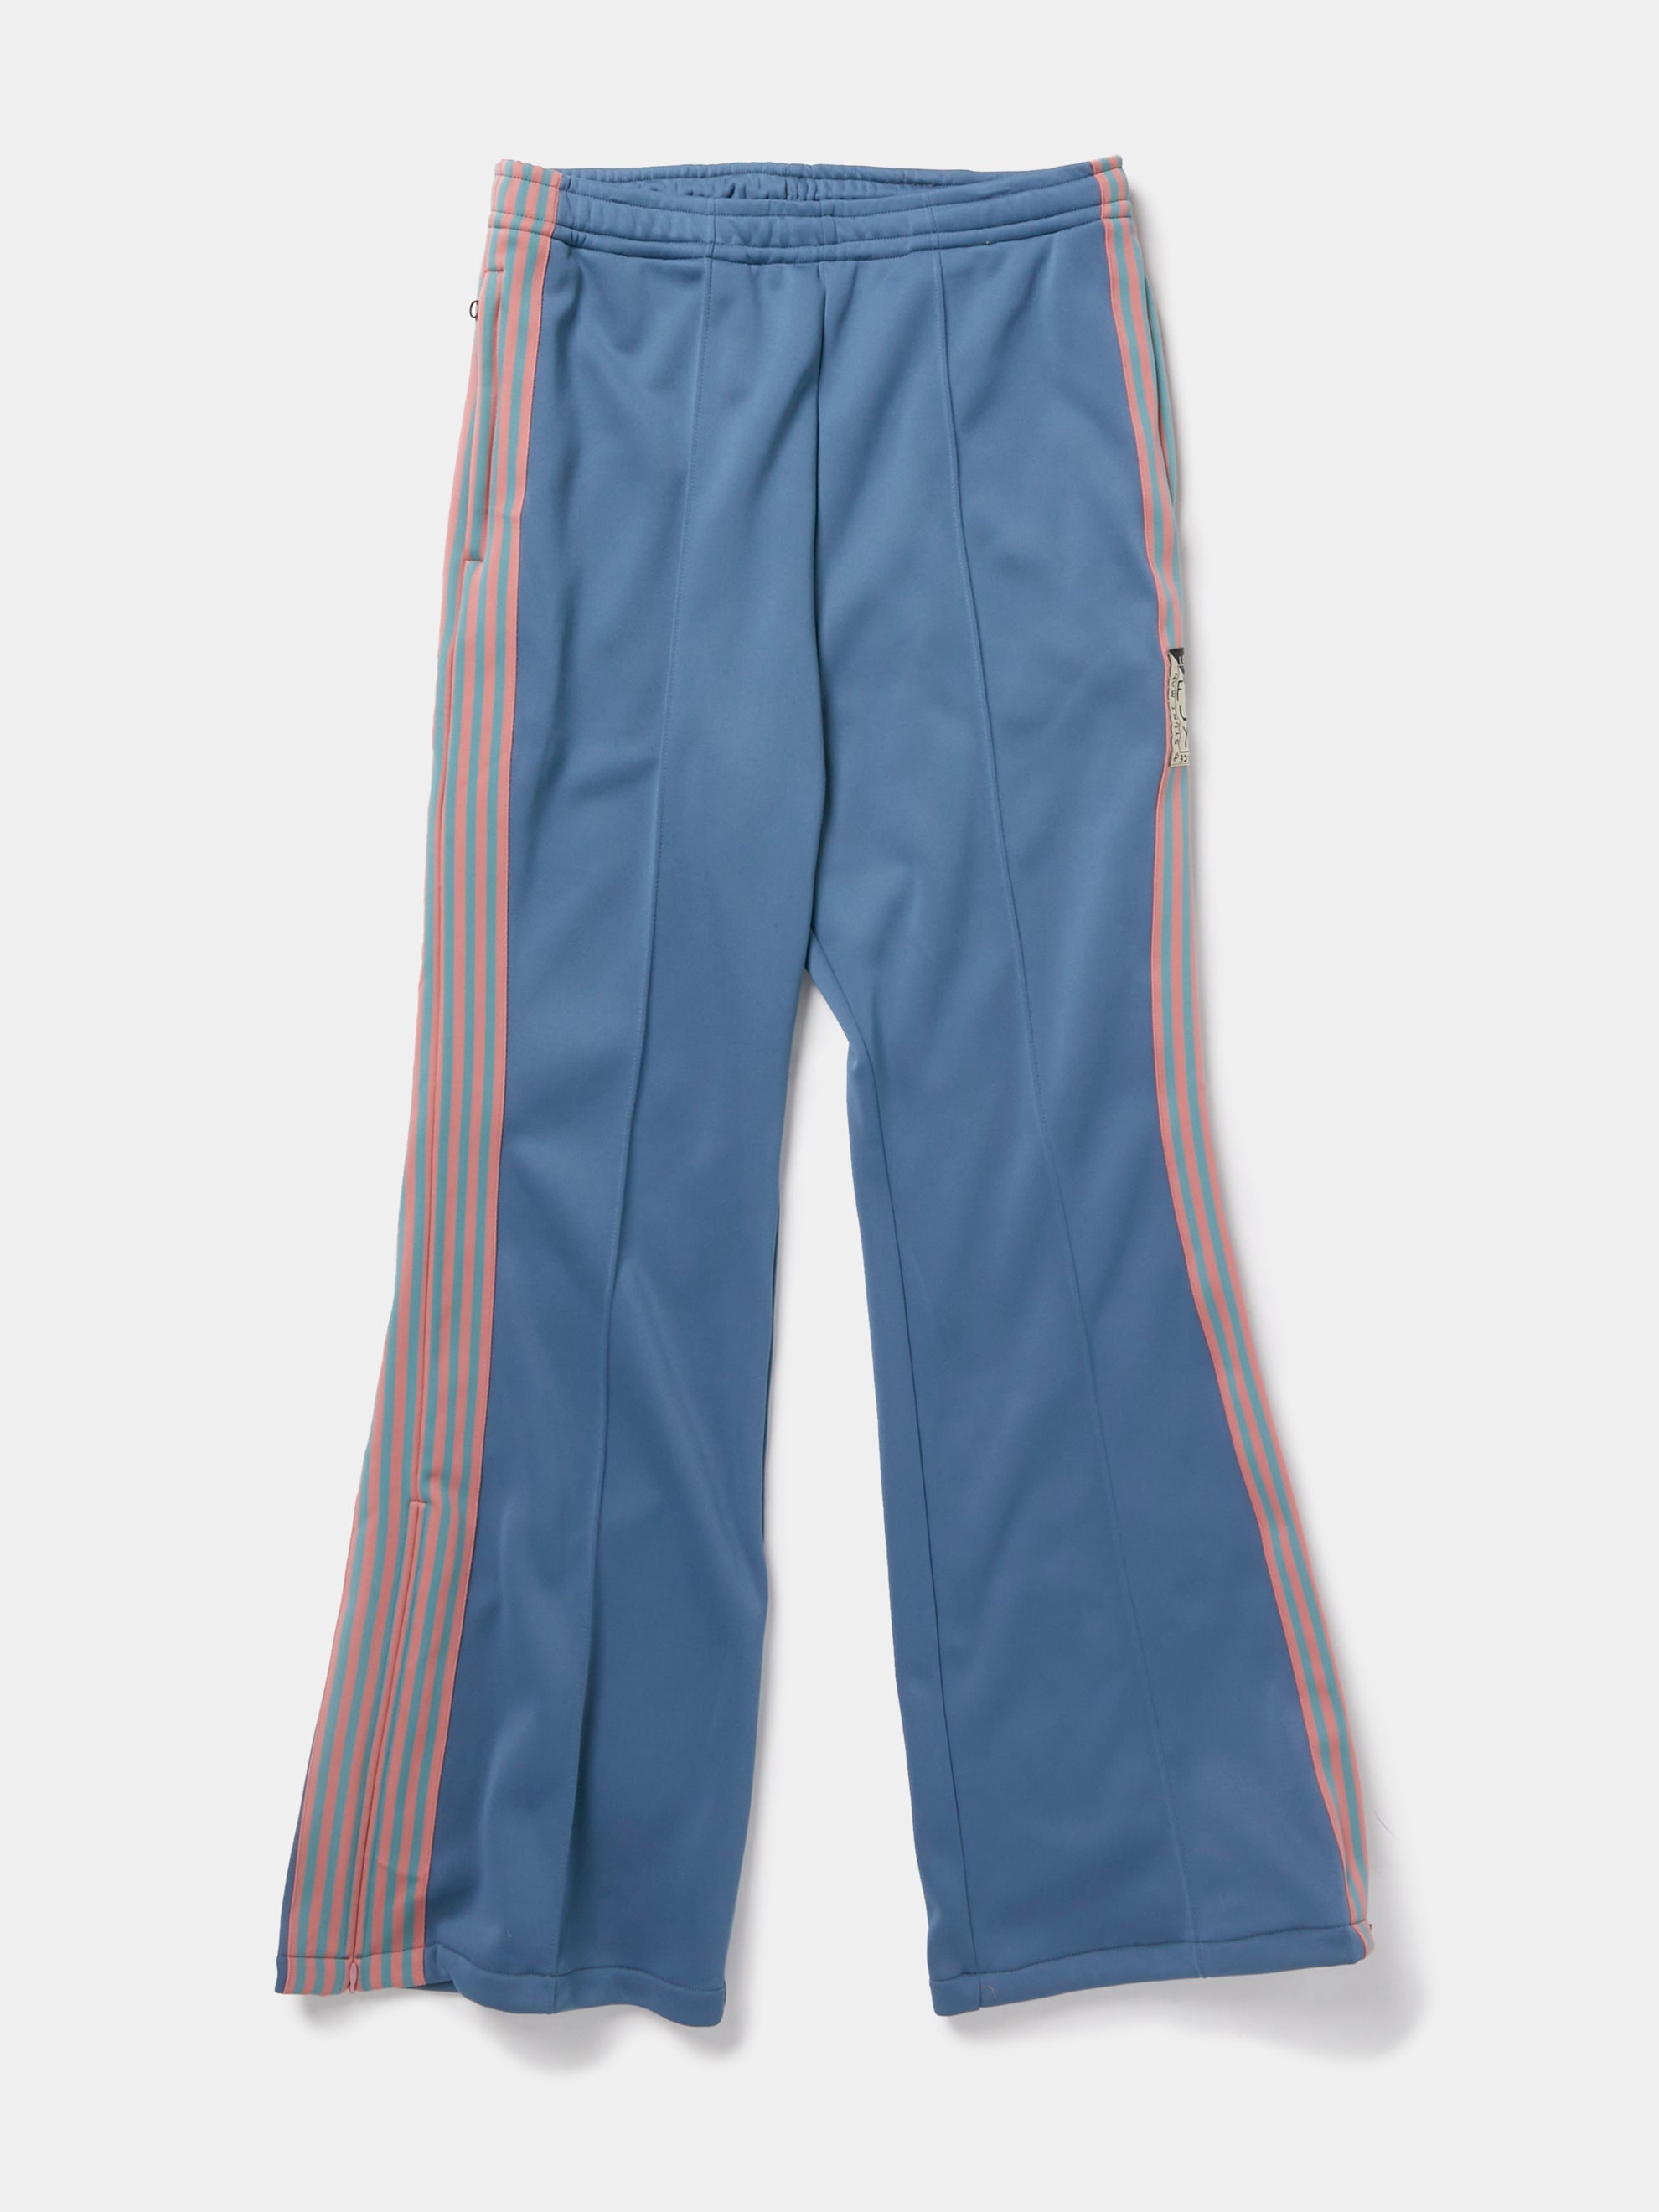 Smooth Heat-Jersey STUNTMEN & WOMEN Track Pants (Turquoise)